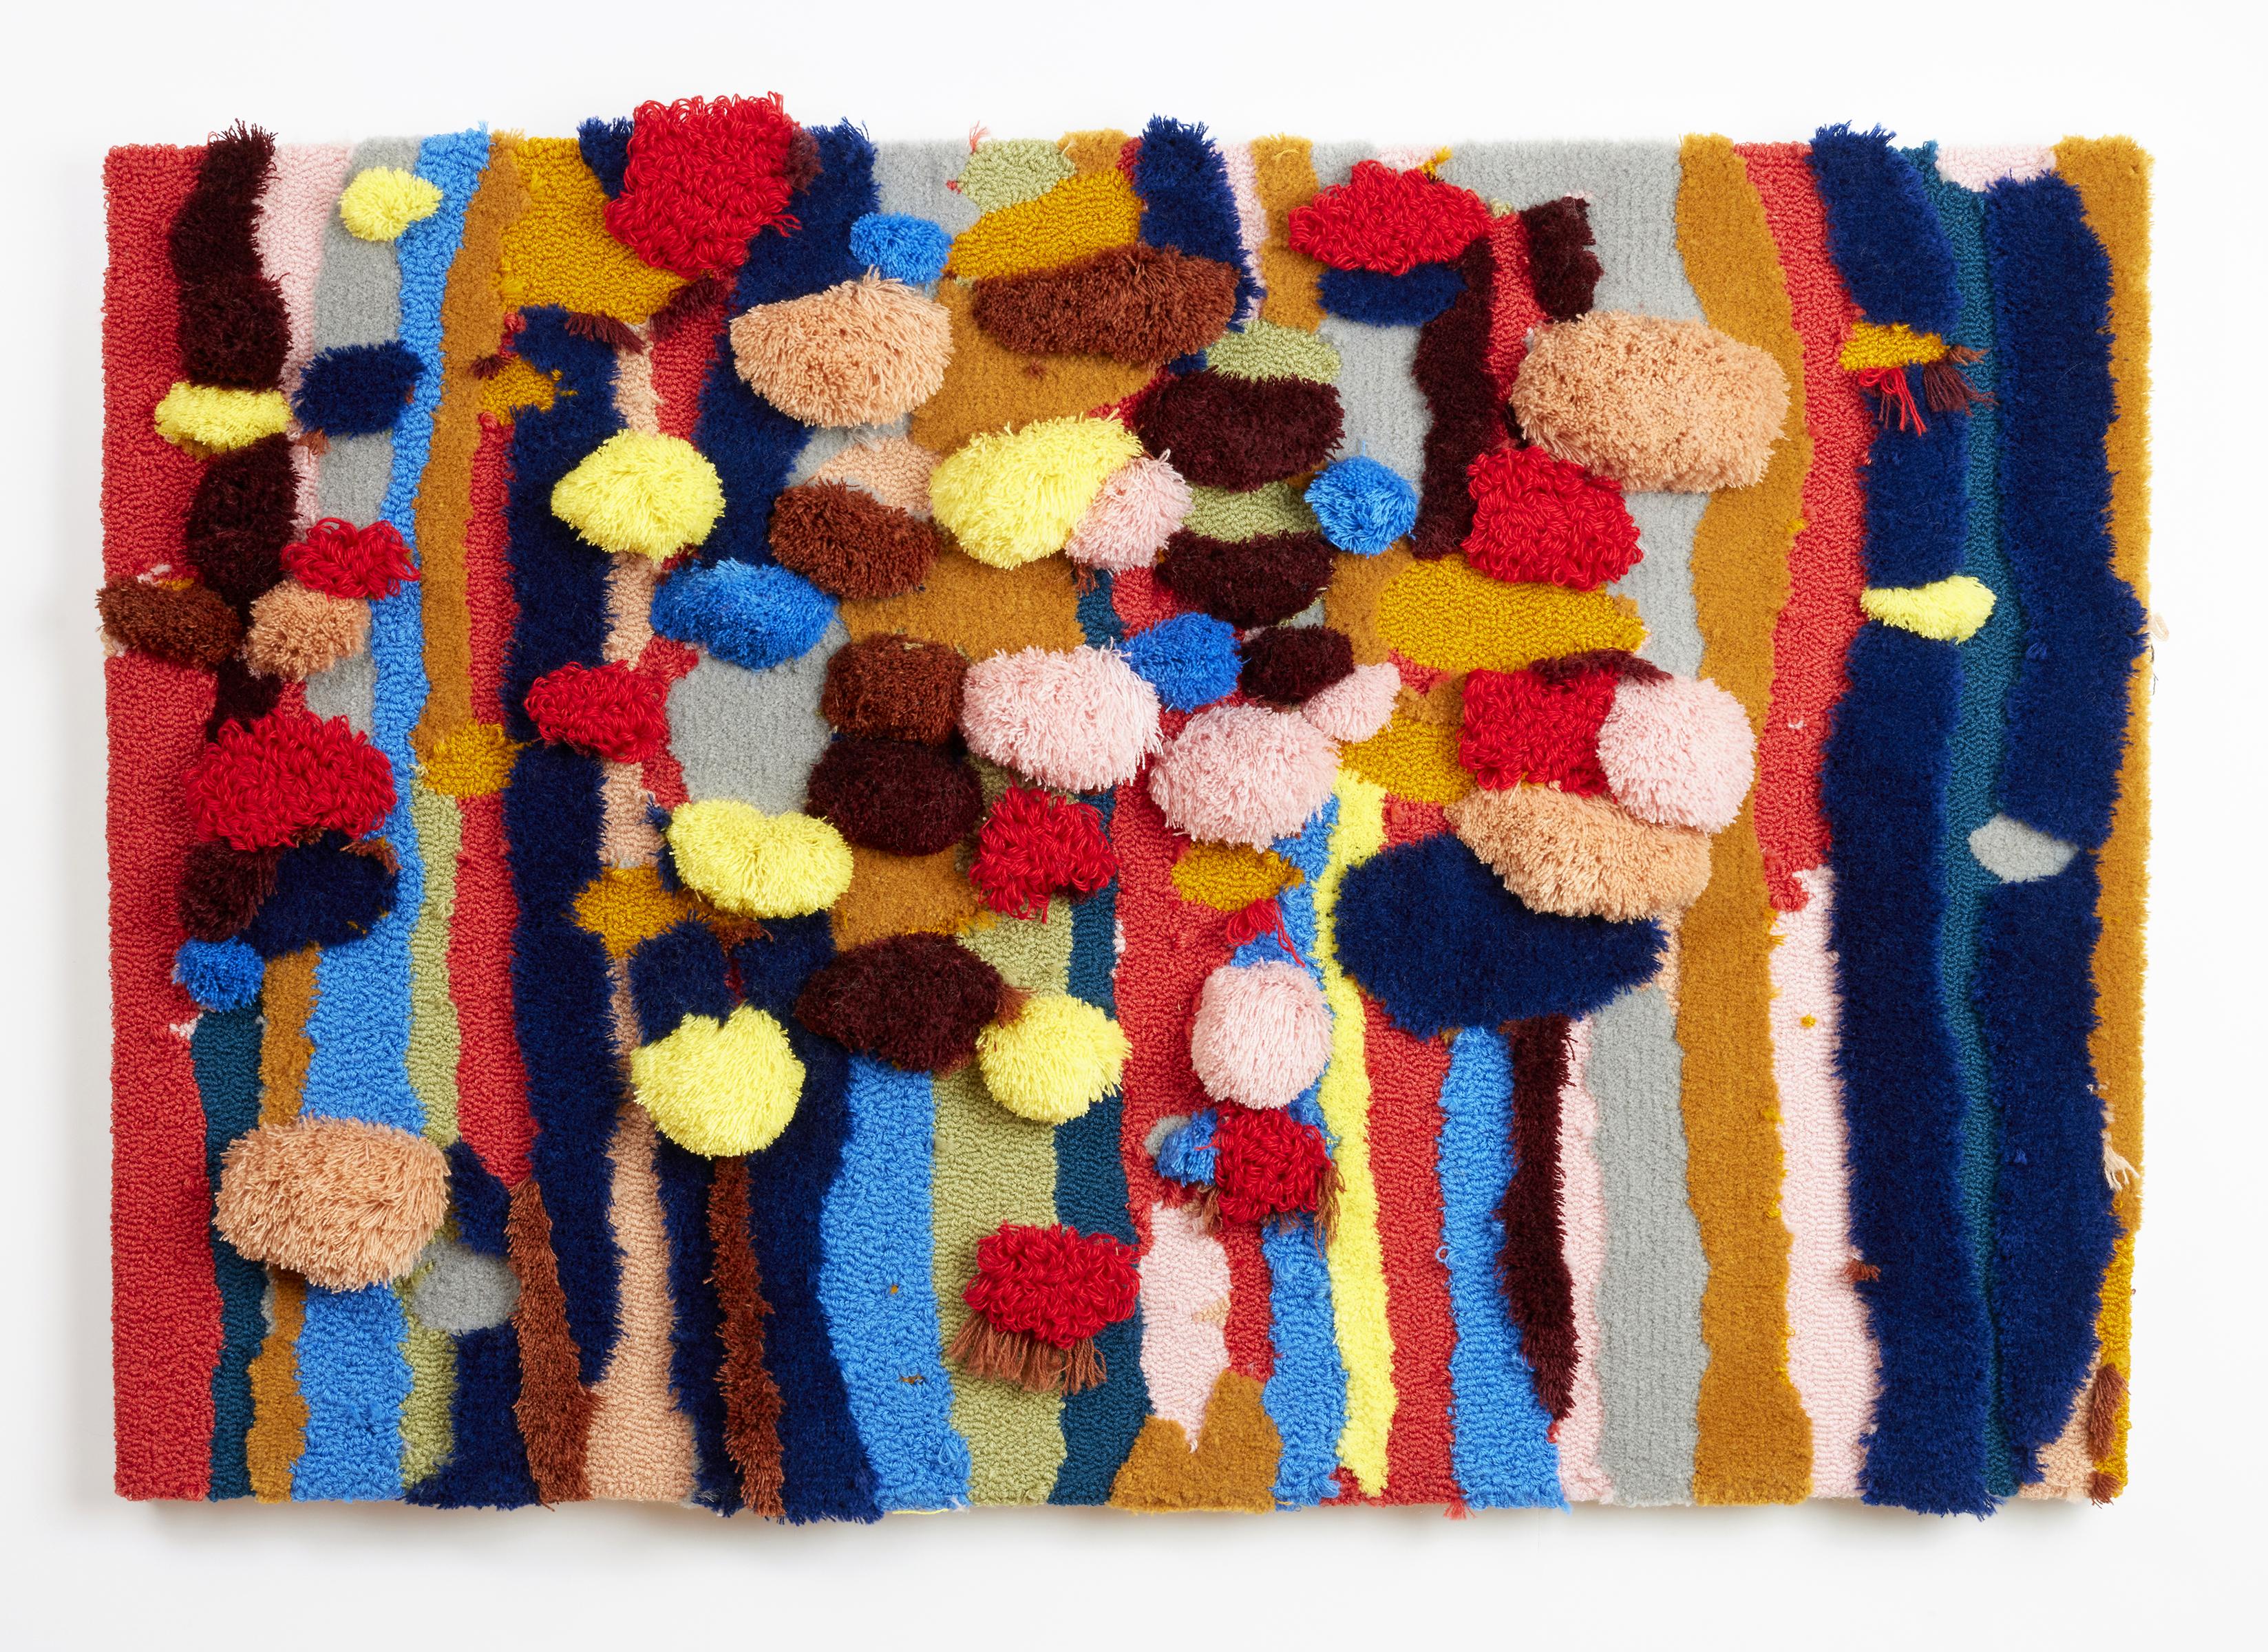 'Merrily, Merrily, Merrily, Merrily' - contemporary fiber art, pattern, abstract